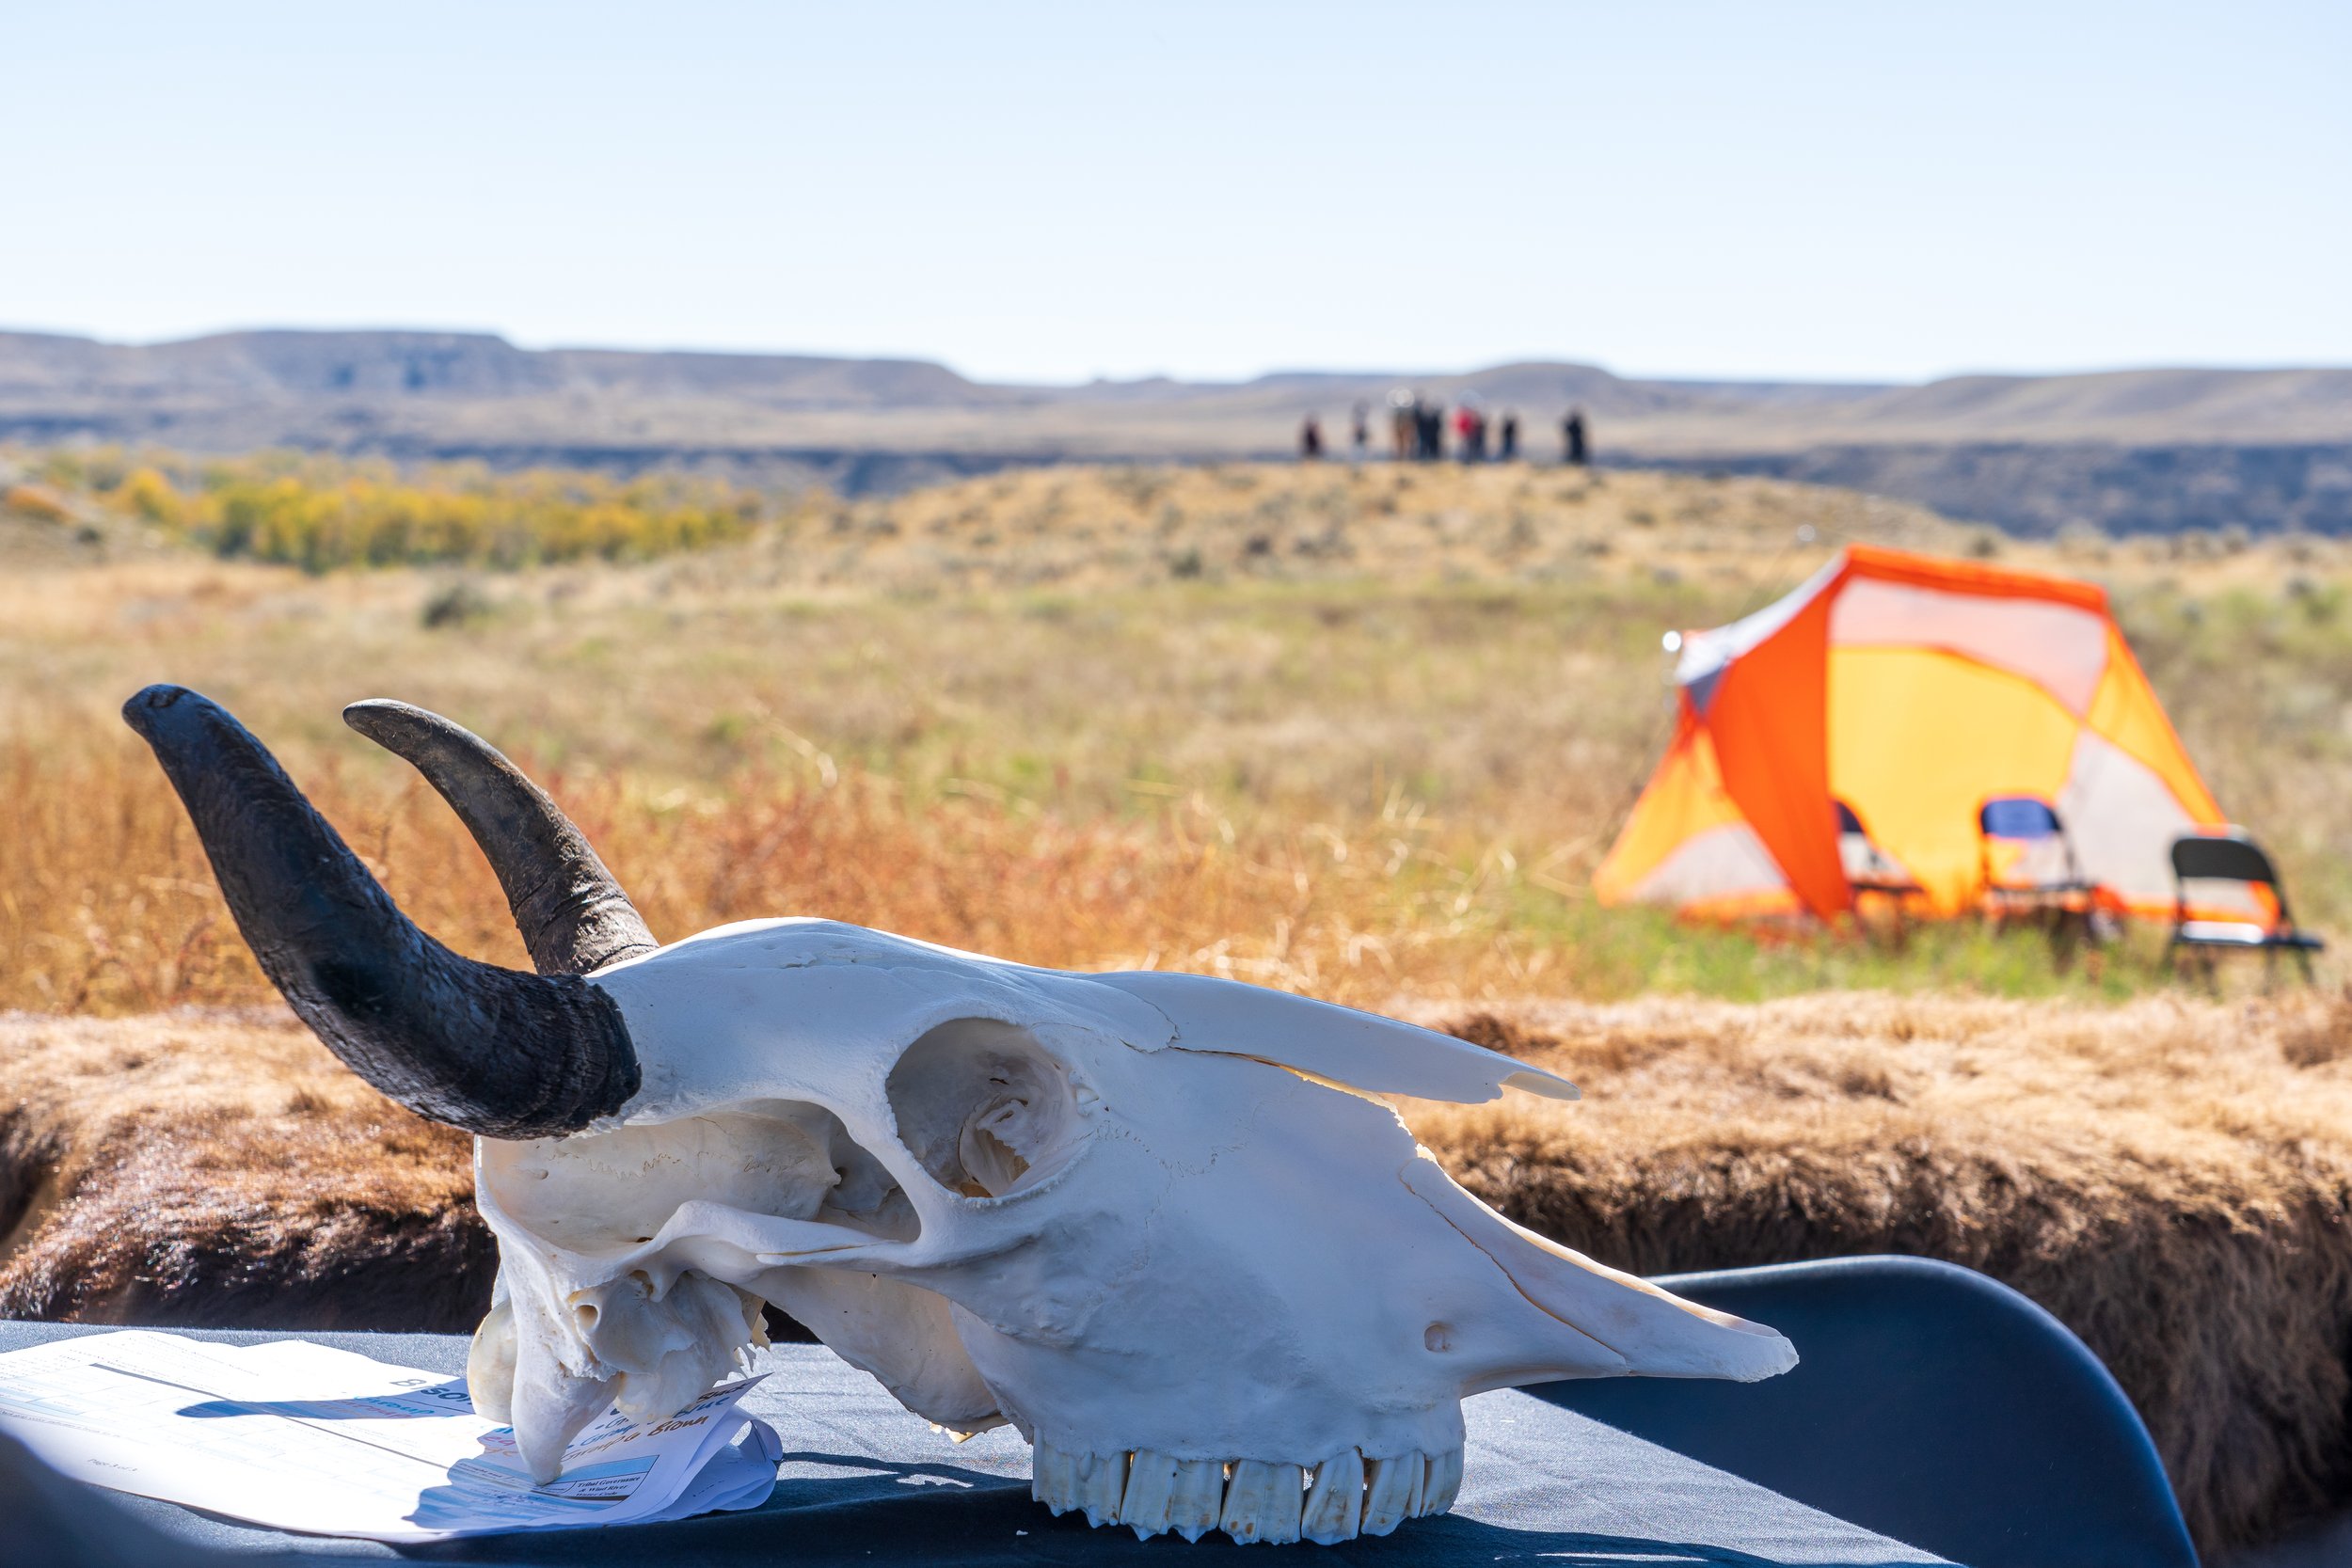  A bison skull overlooks students among the sagebrush. (Photo GYC/London Bernier) 